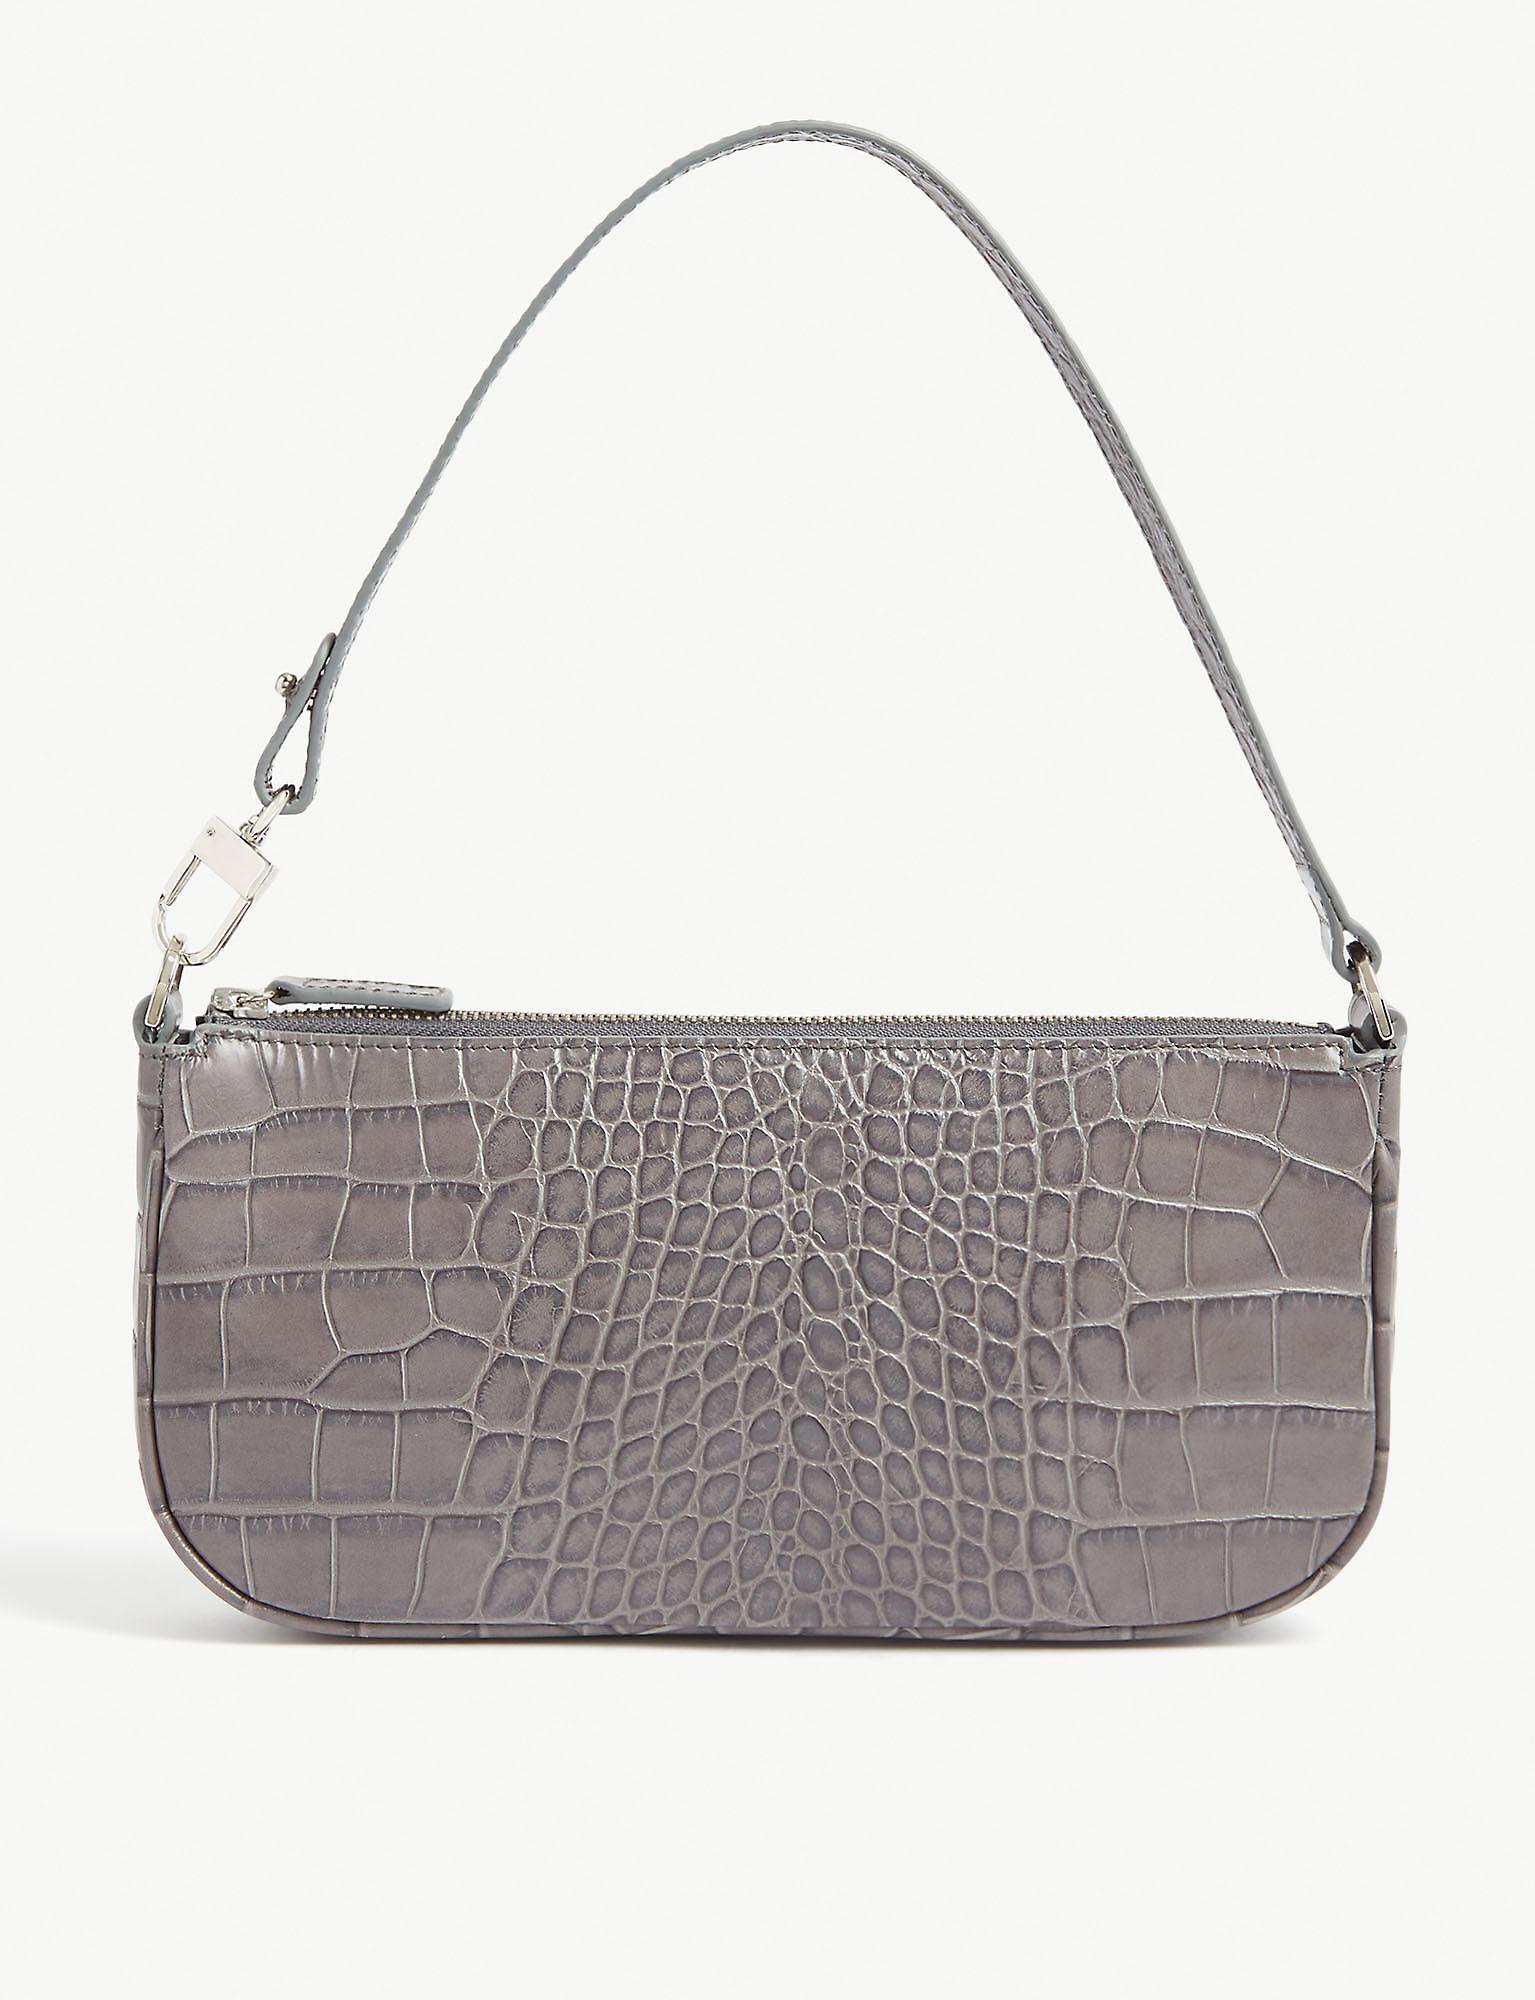 BY FAR Mini Crocodile Effect Leather Cross Body Bag in Gray